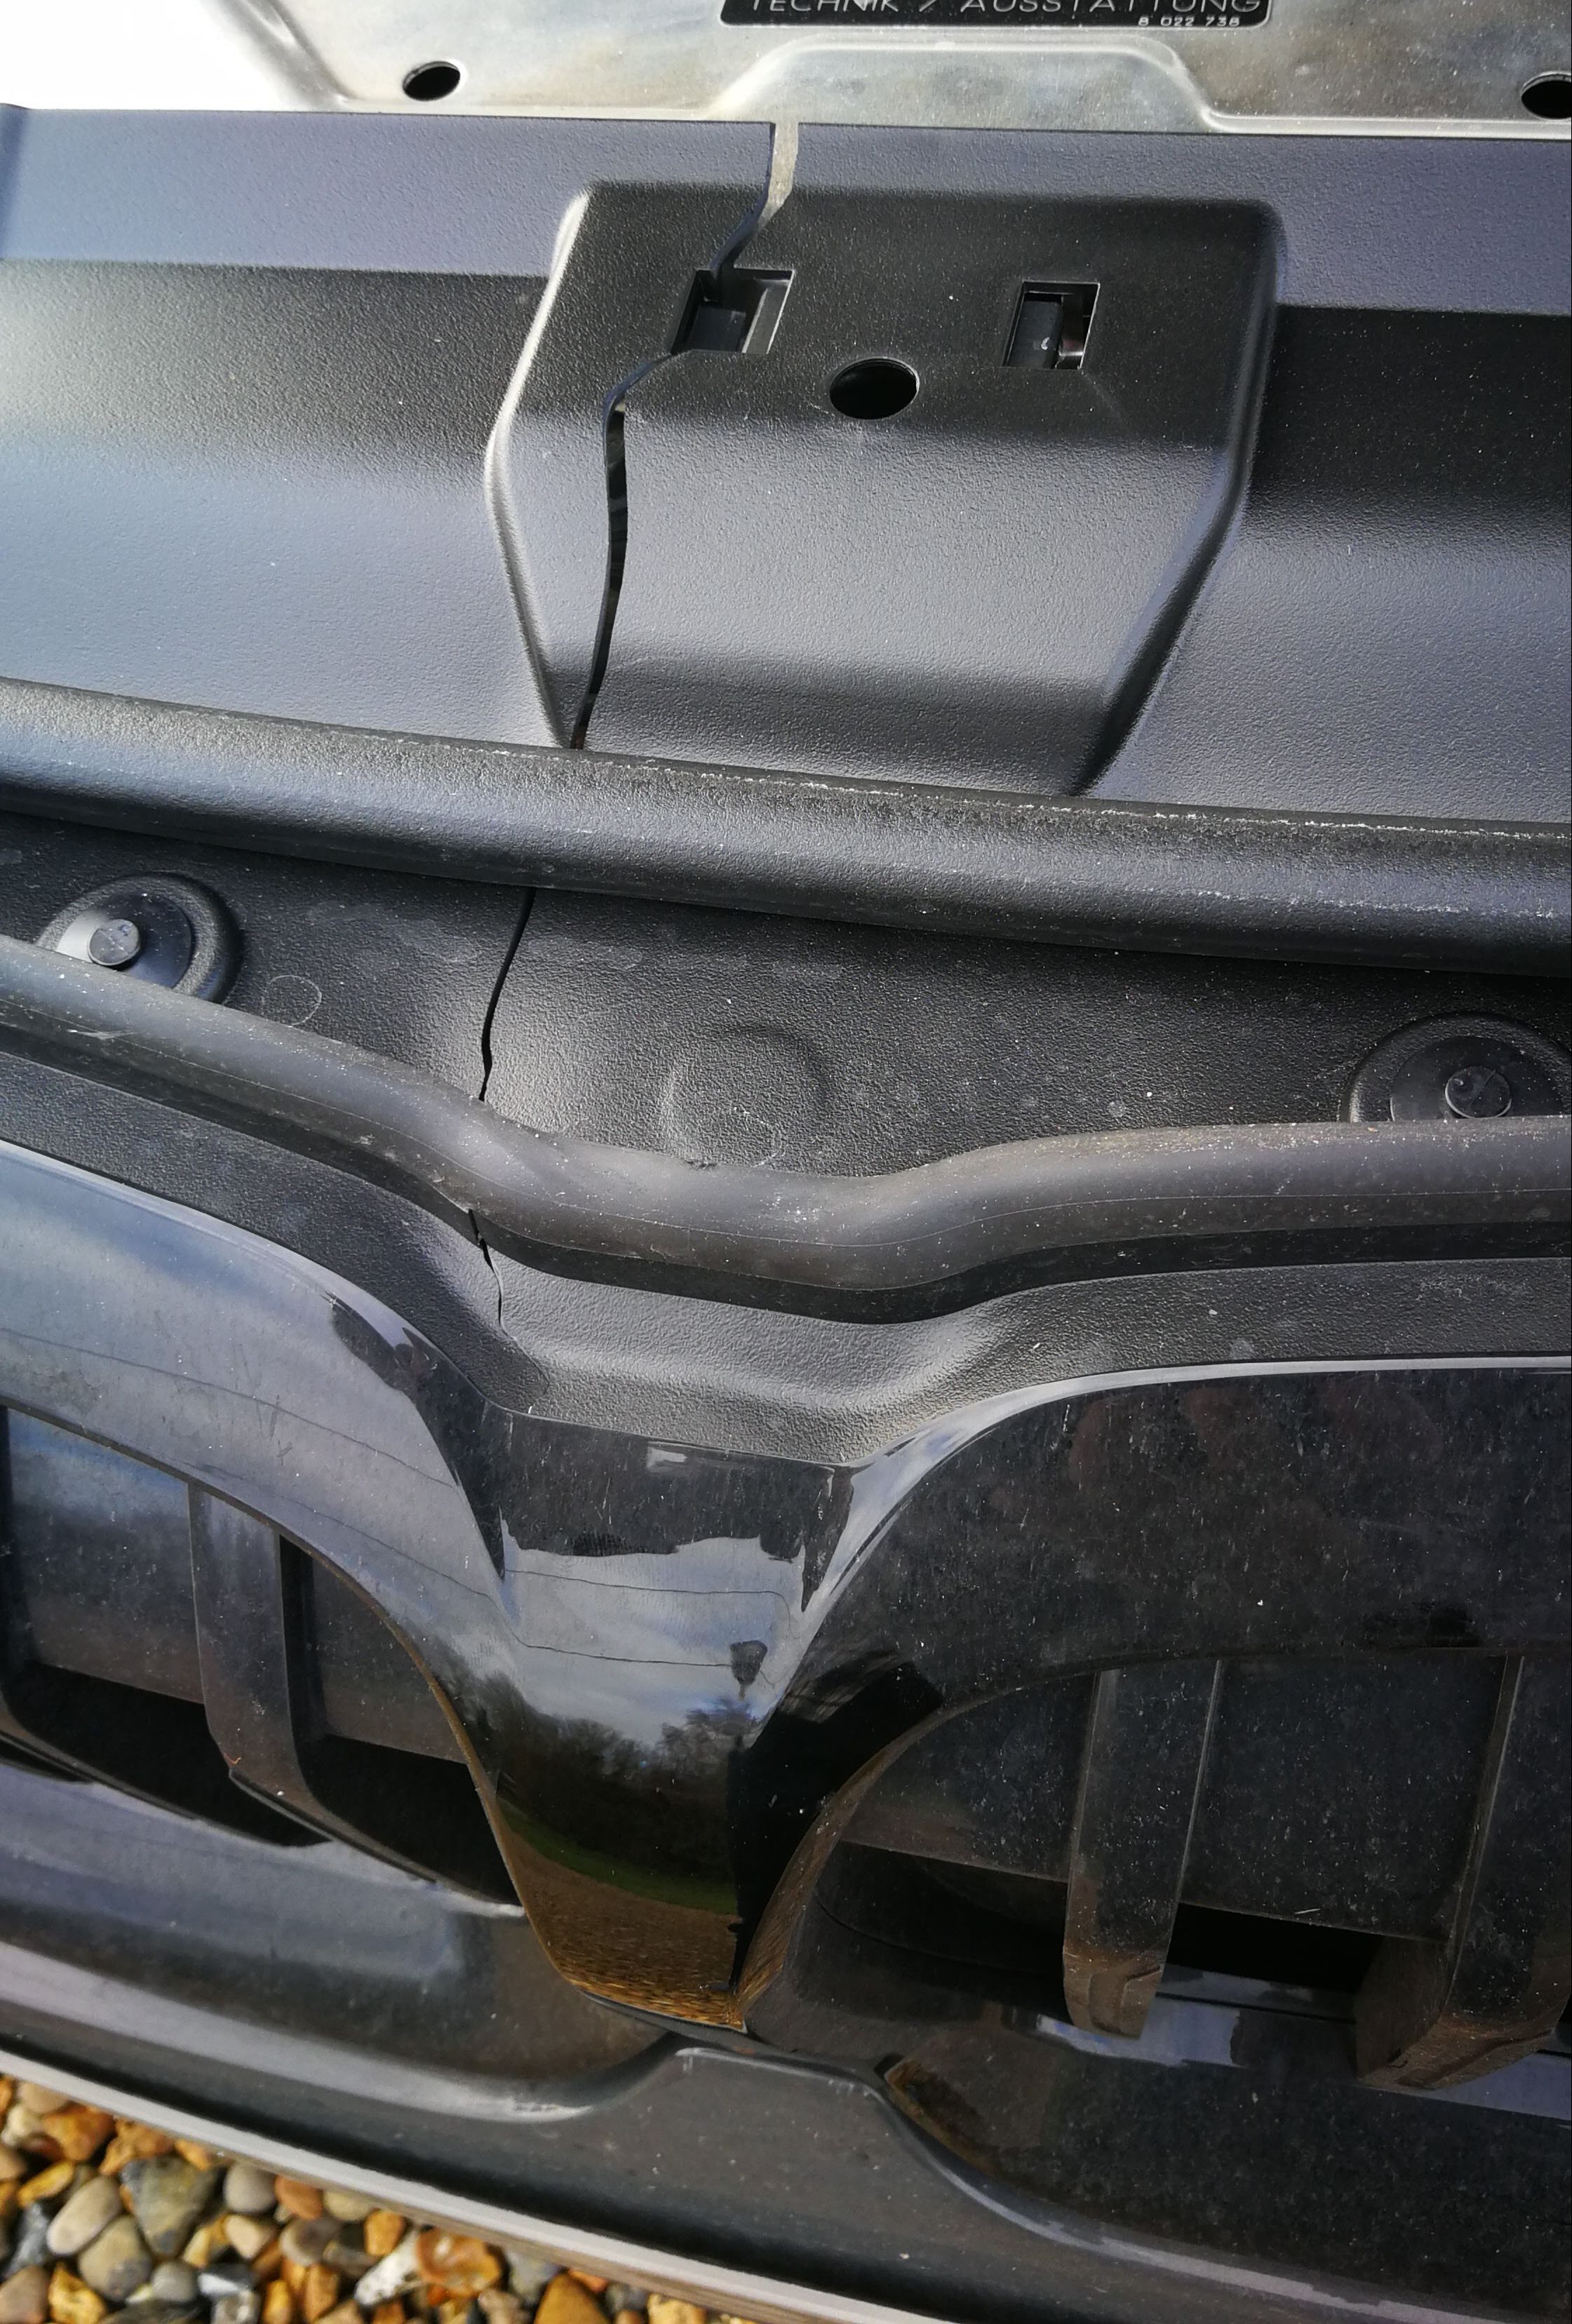 BMW 330d grille damage